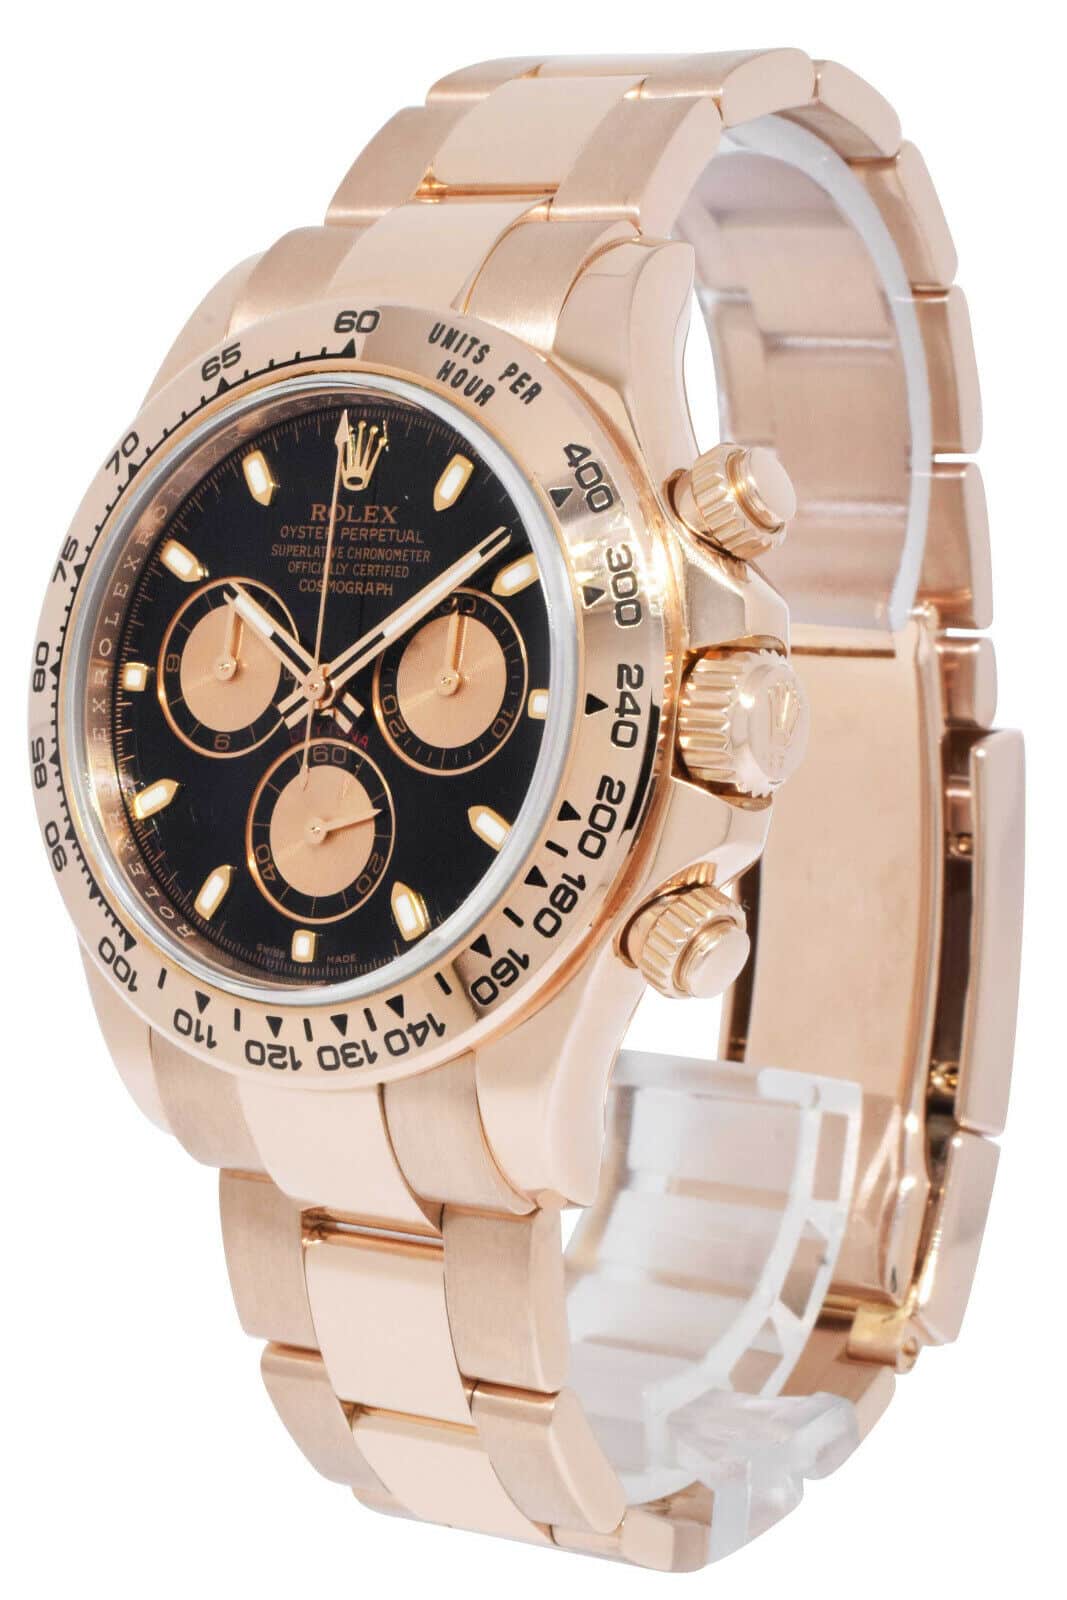 Rolex Daytona Chronograph 18k Rose Gold Black Dial Watch Box/Papers '11 116505